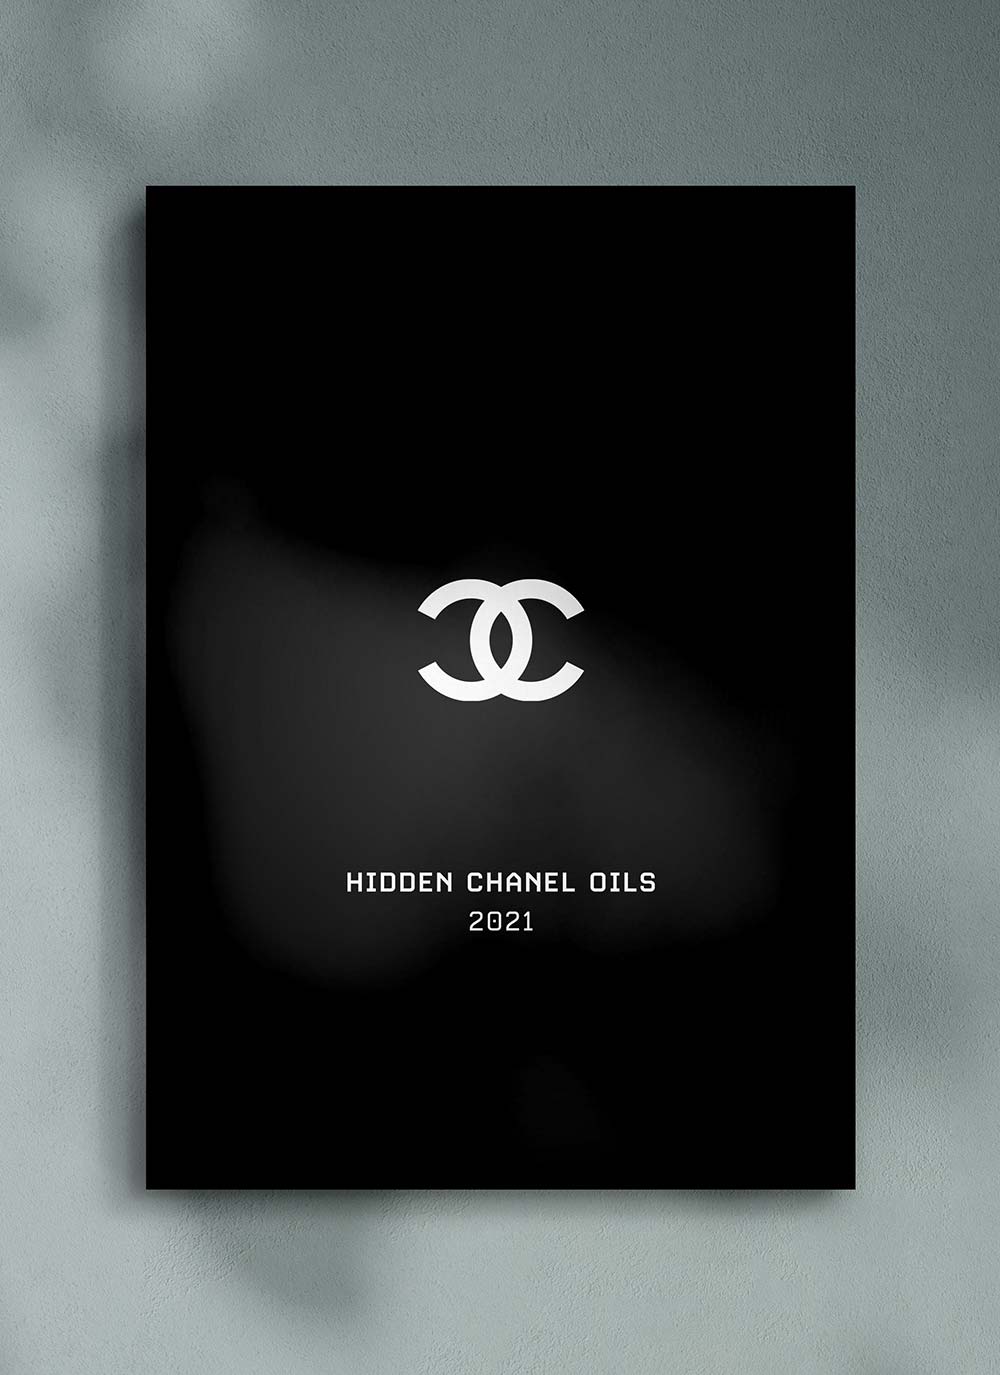 Secret Chanel Perfume Oils Report 2021